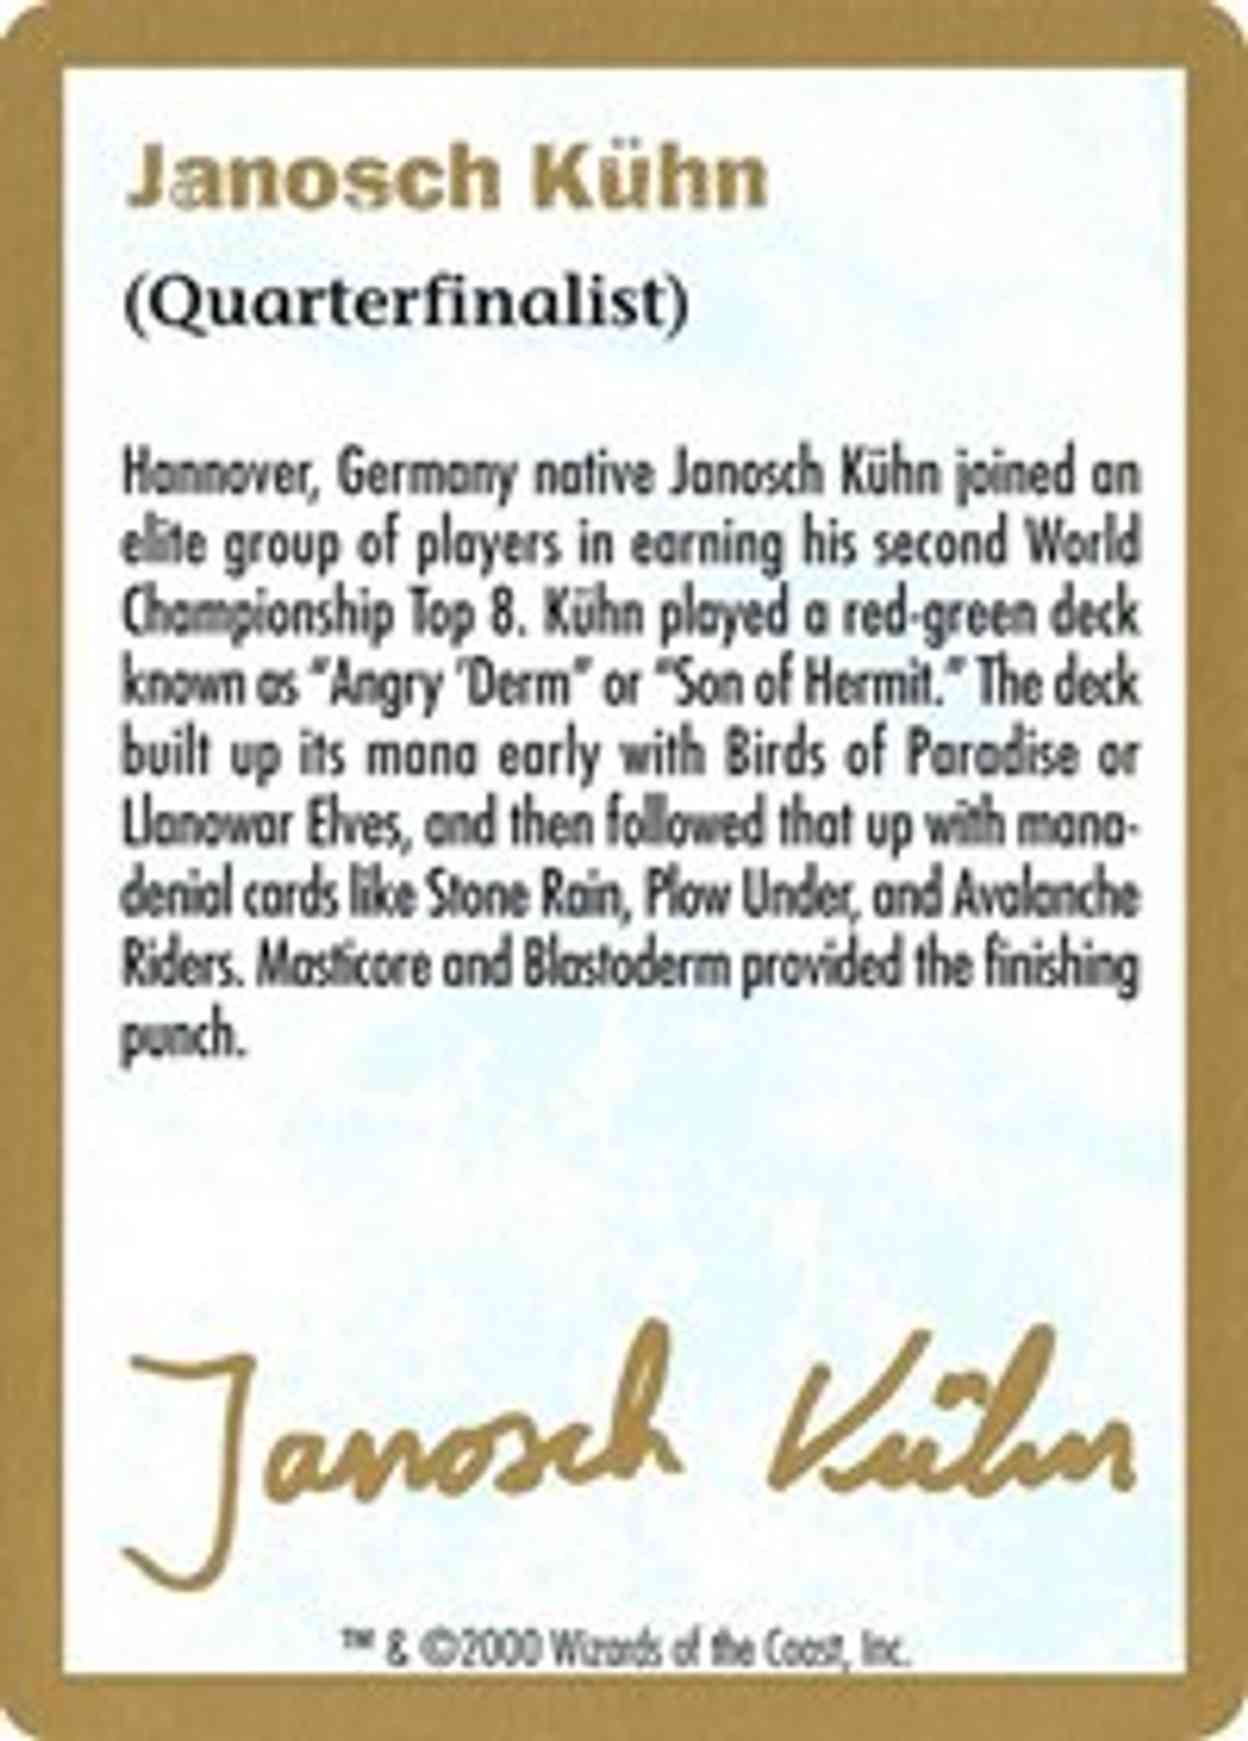 2000 Janosch Kuhn Biography Card magic card front